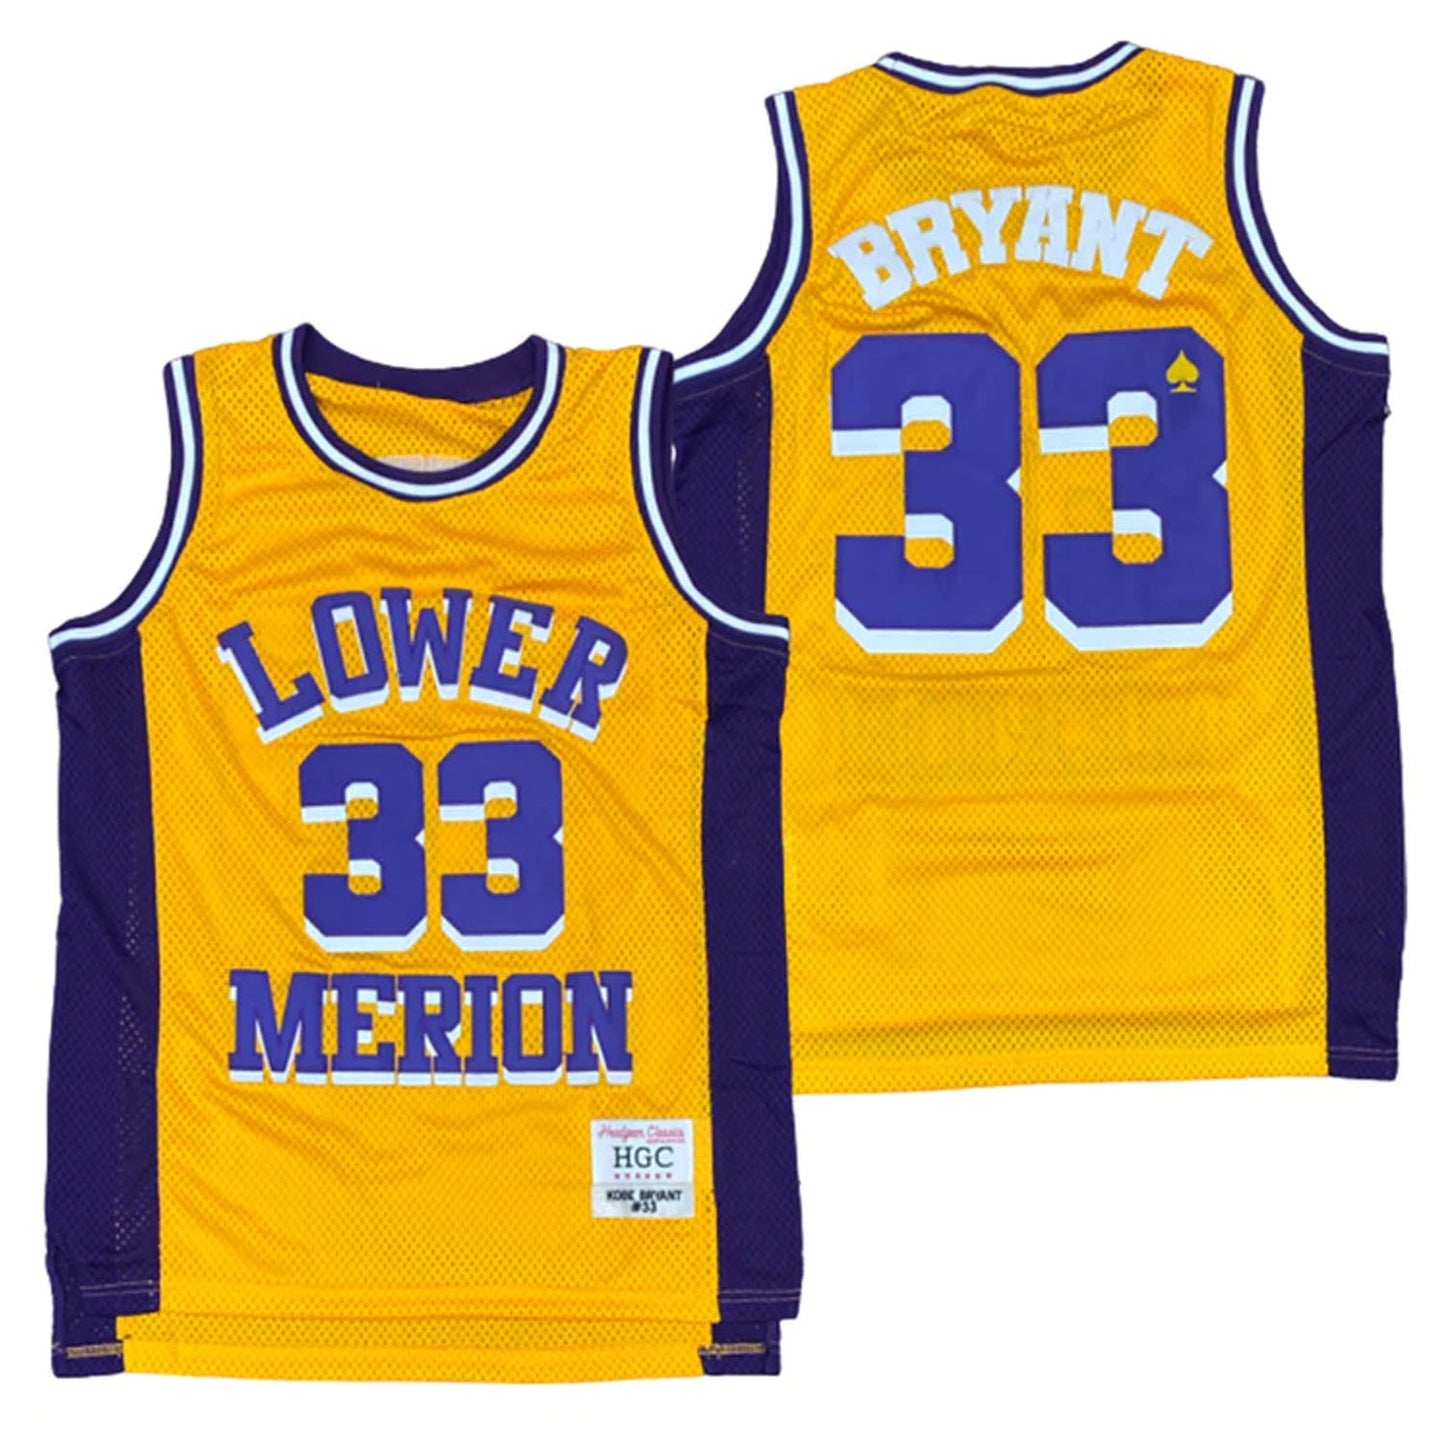 Kobe Bryant #33 Lower Merion X Lakers Jersey